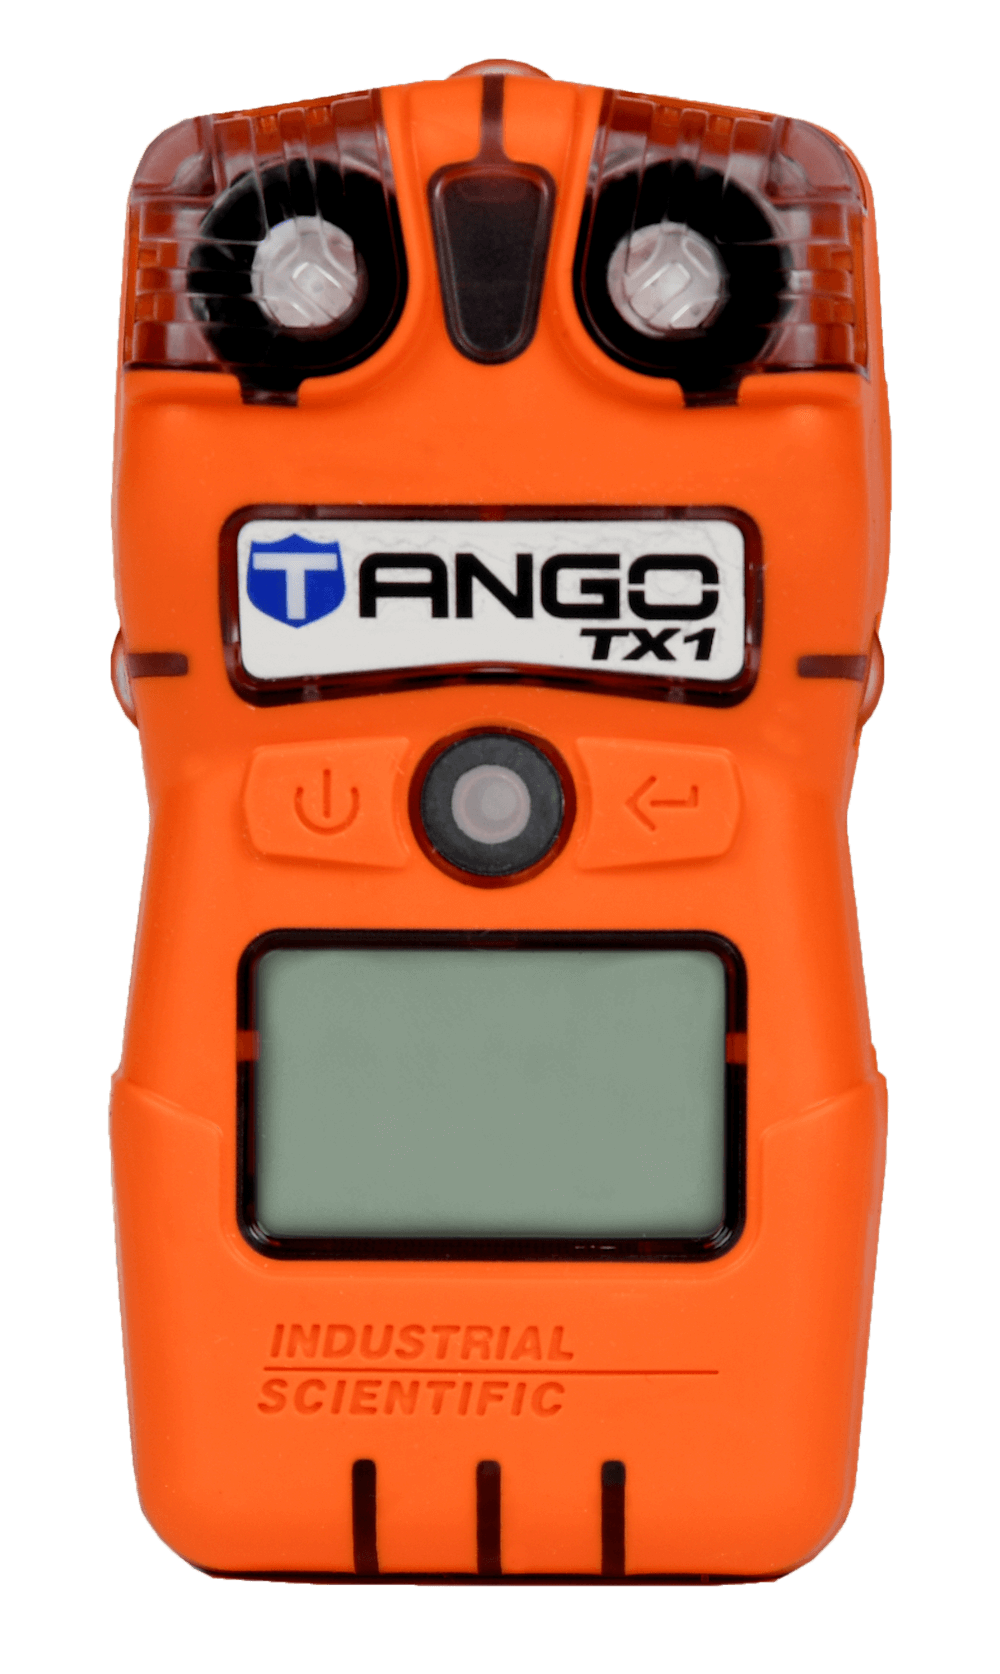 Tango TX1 product image